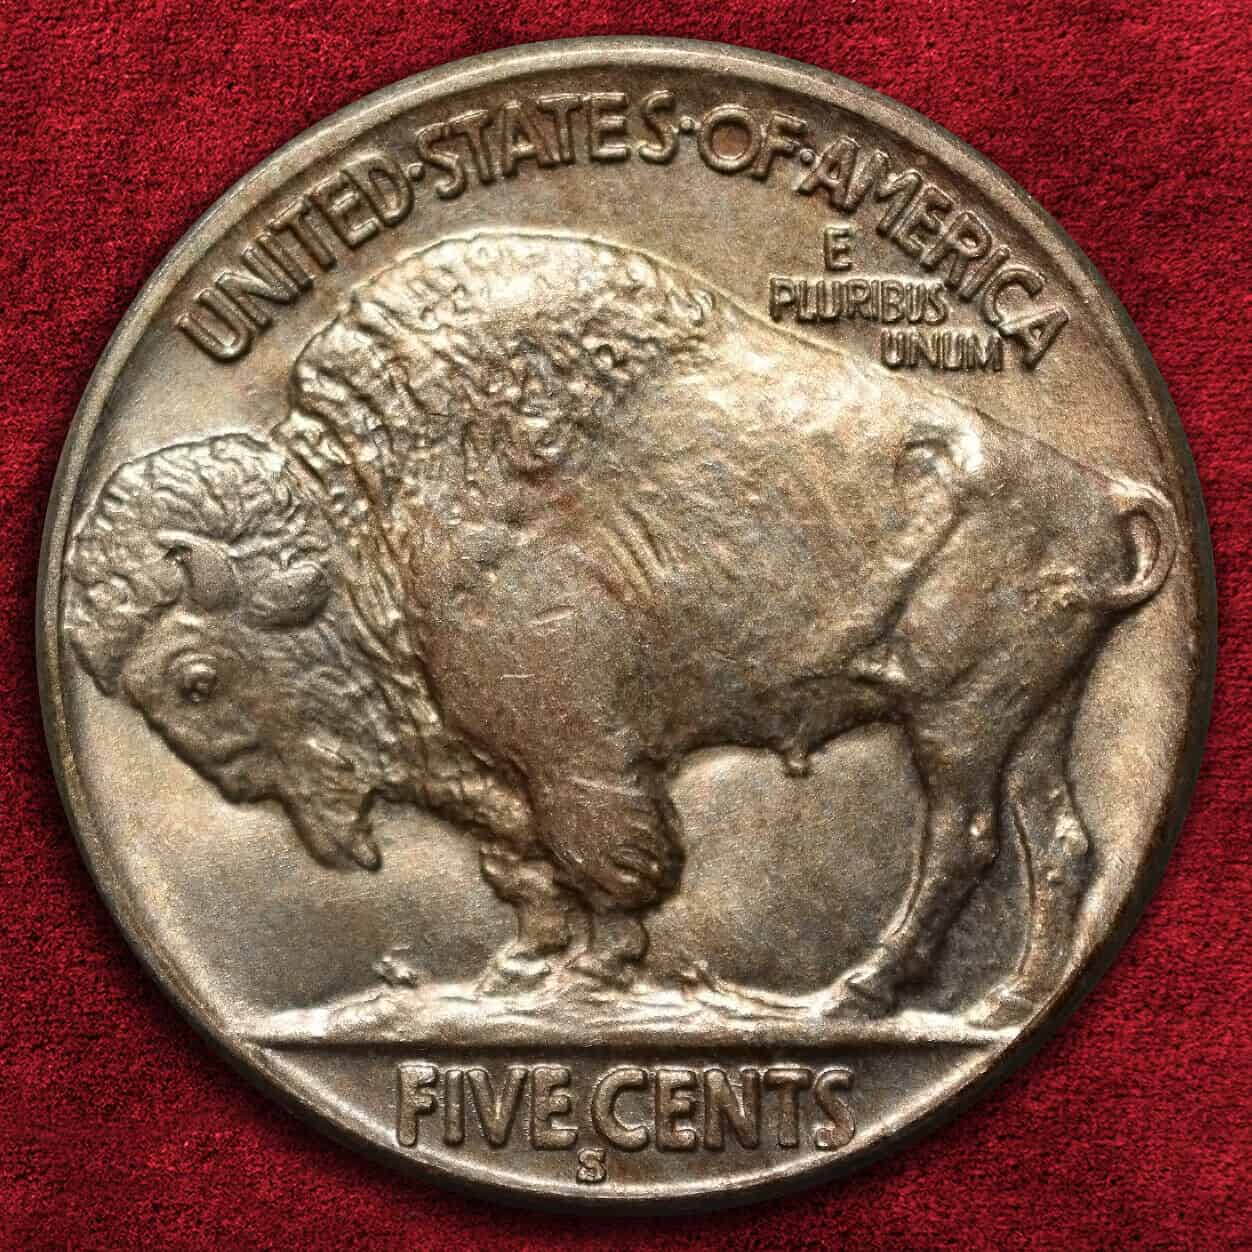 1937 ‘S’ Buffalo Nickel Value